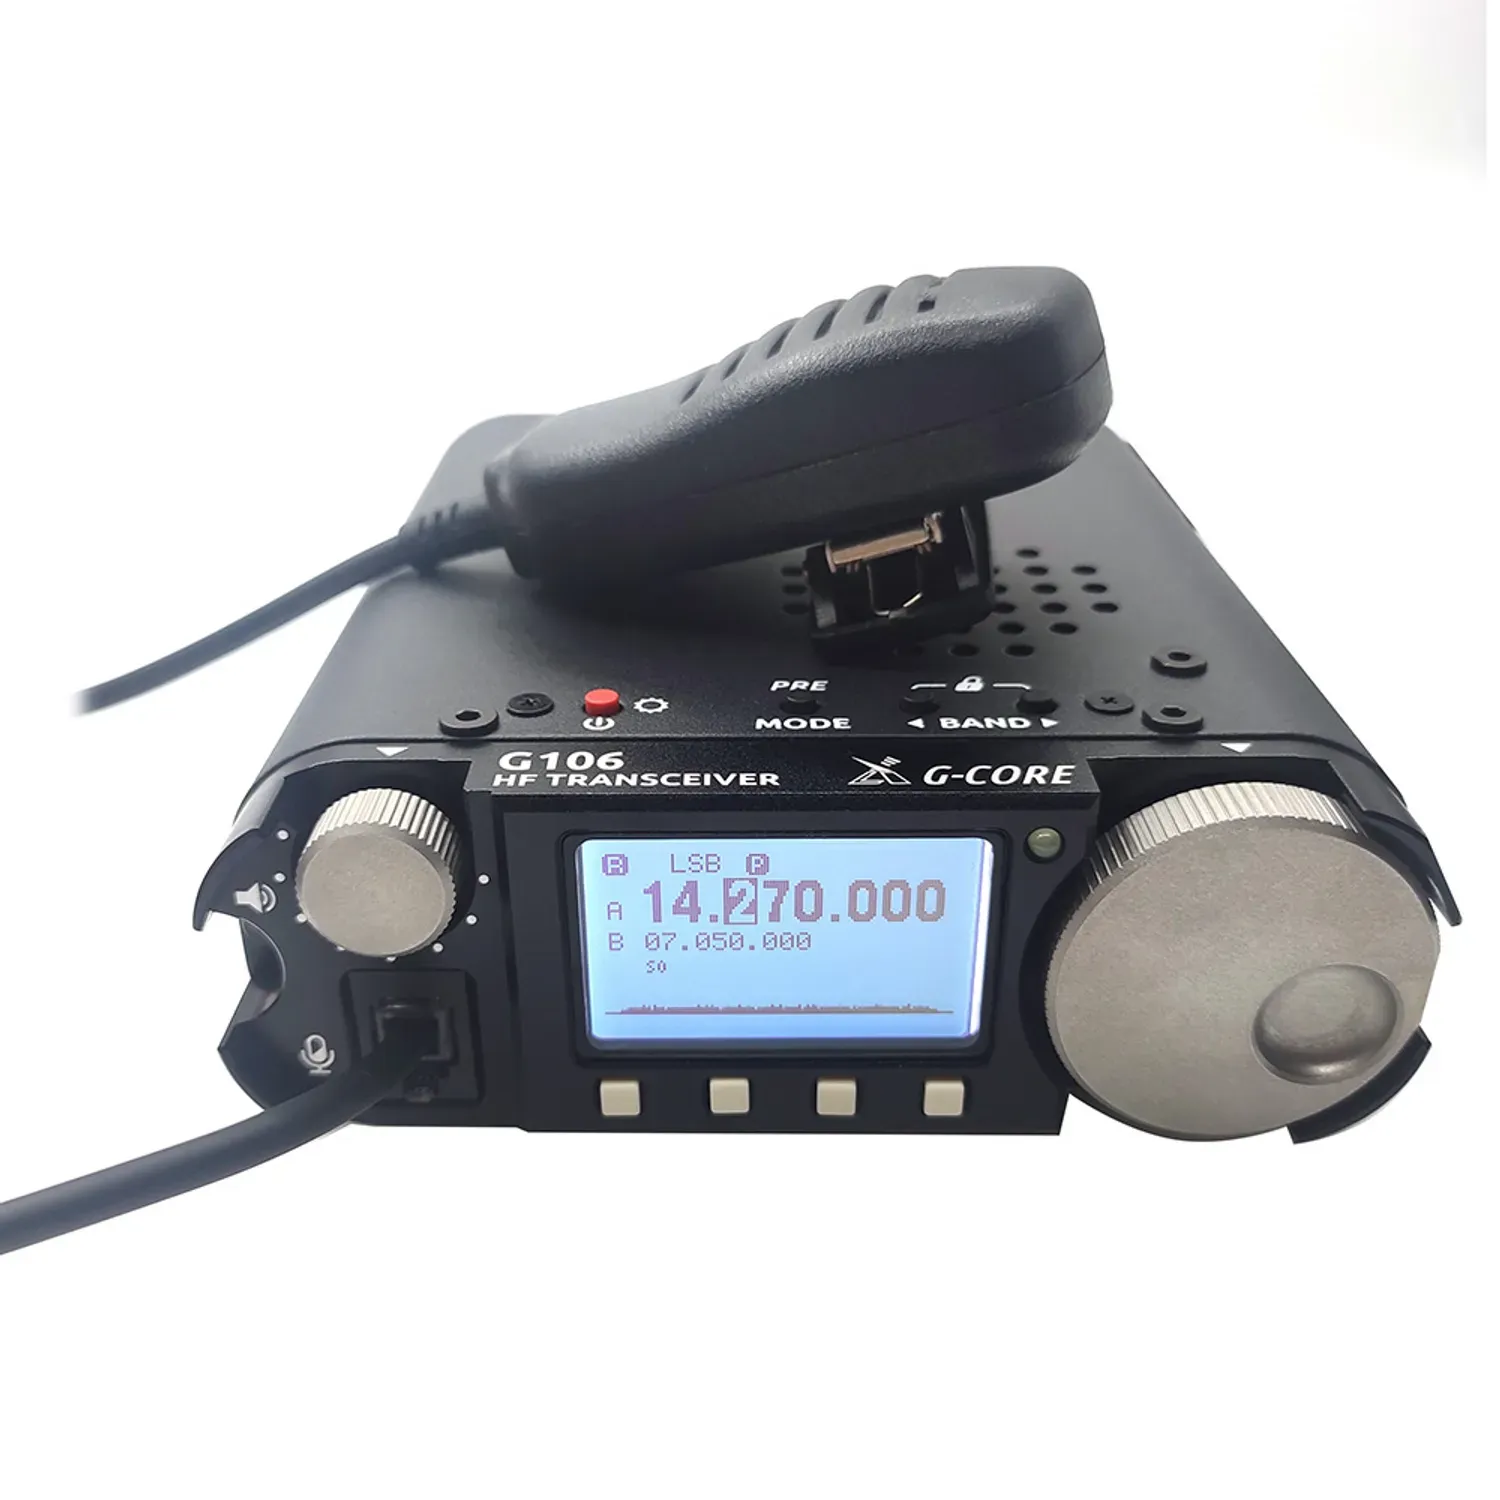 HF radio transceivers